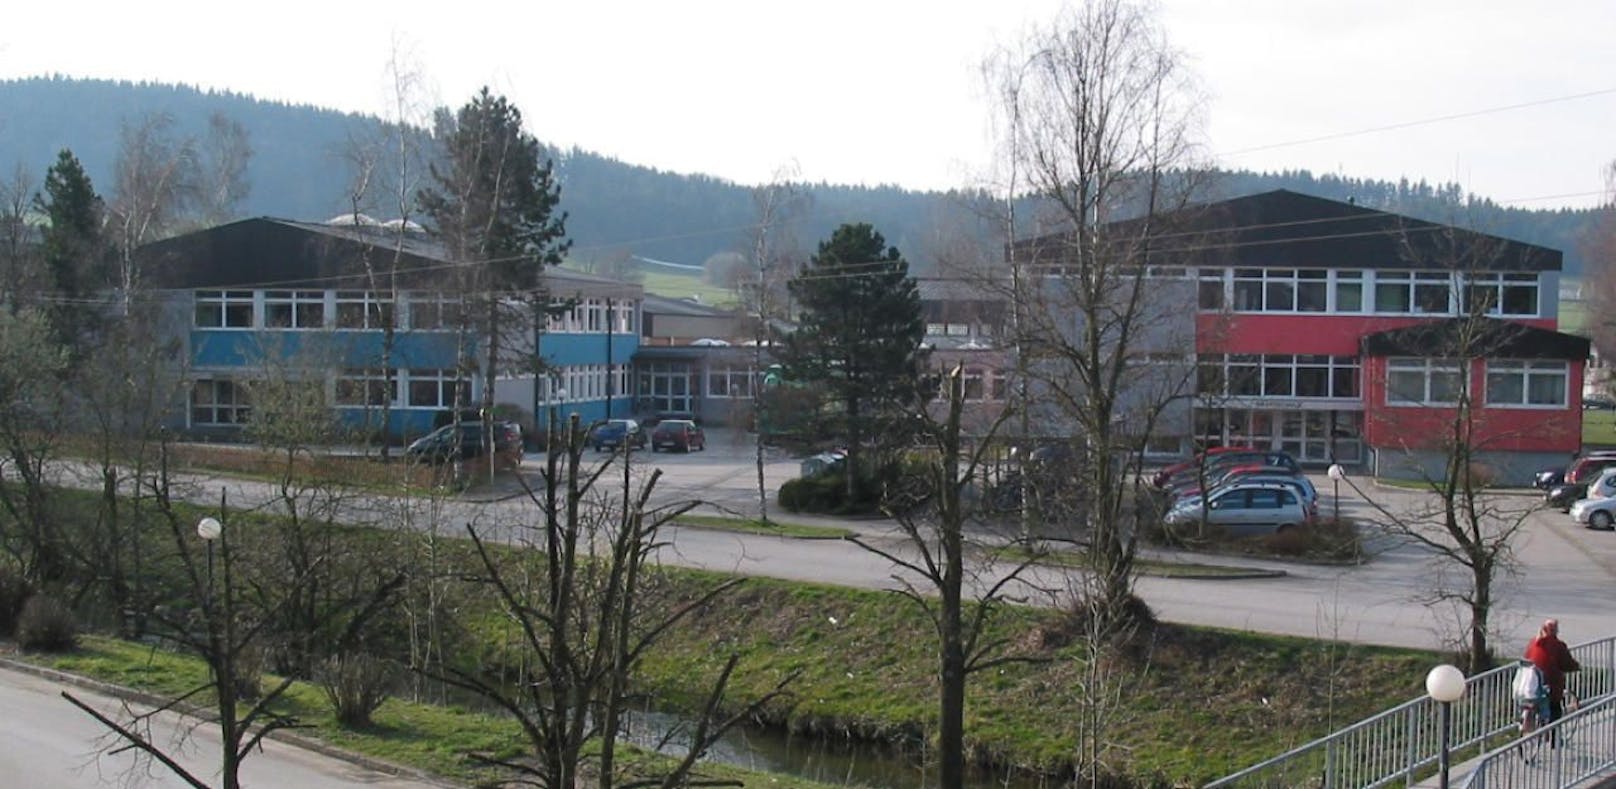 Tuberkulose-Alarm an Schule in Oberösterreich